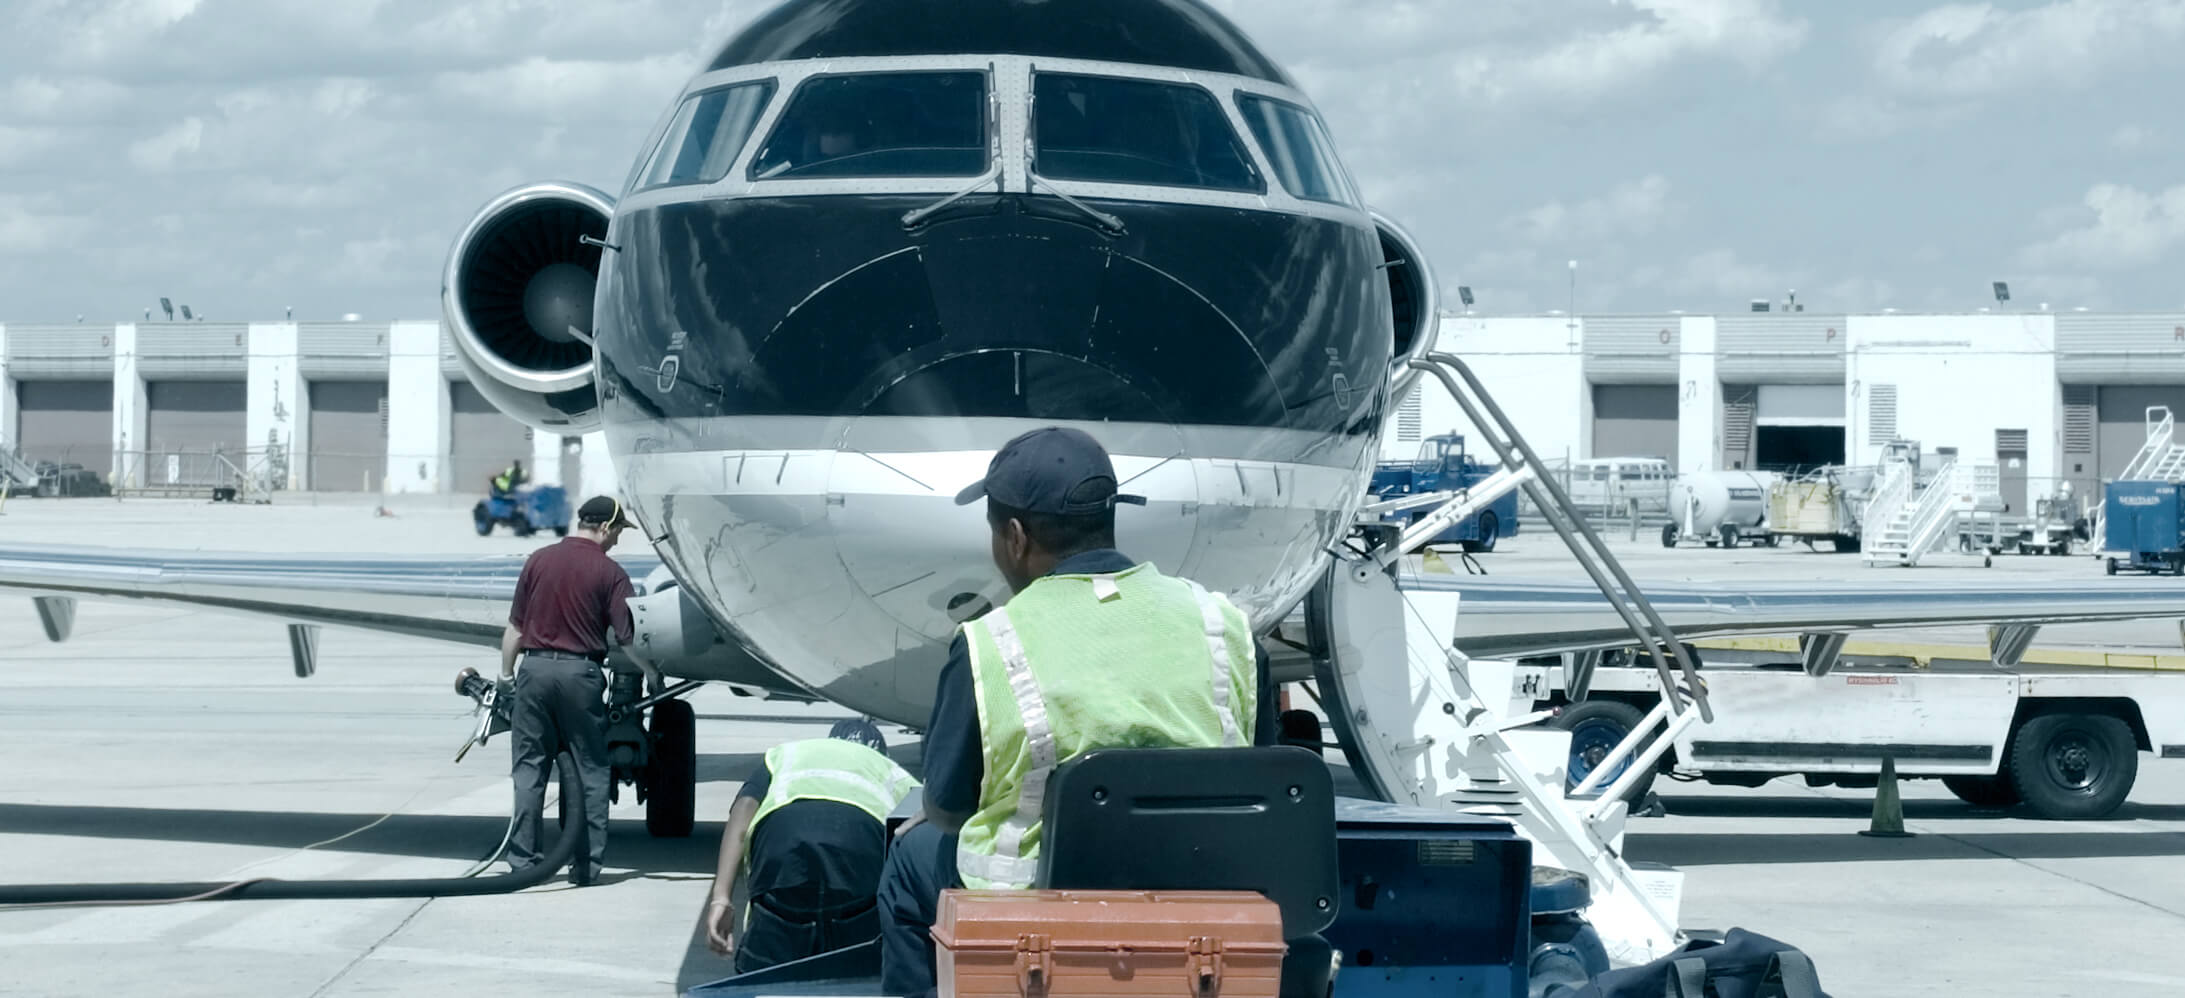 Bringing luggage to an aircraft